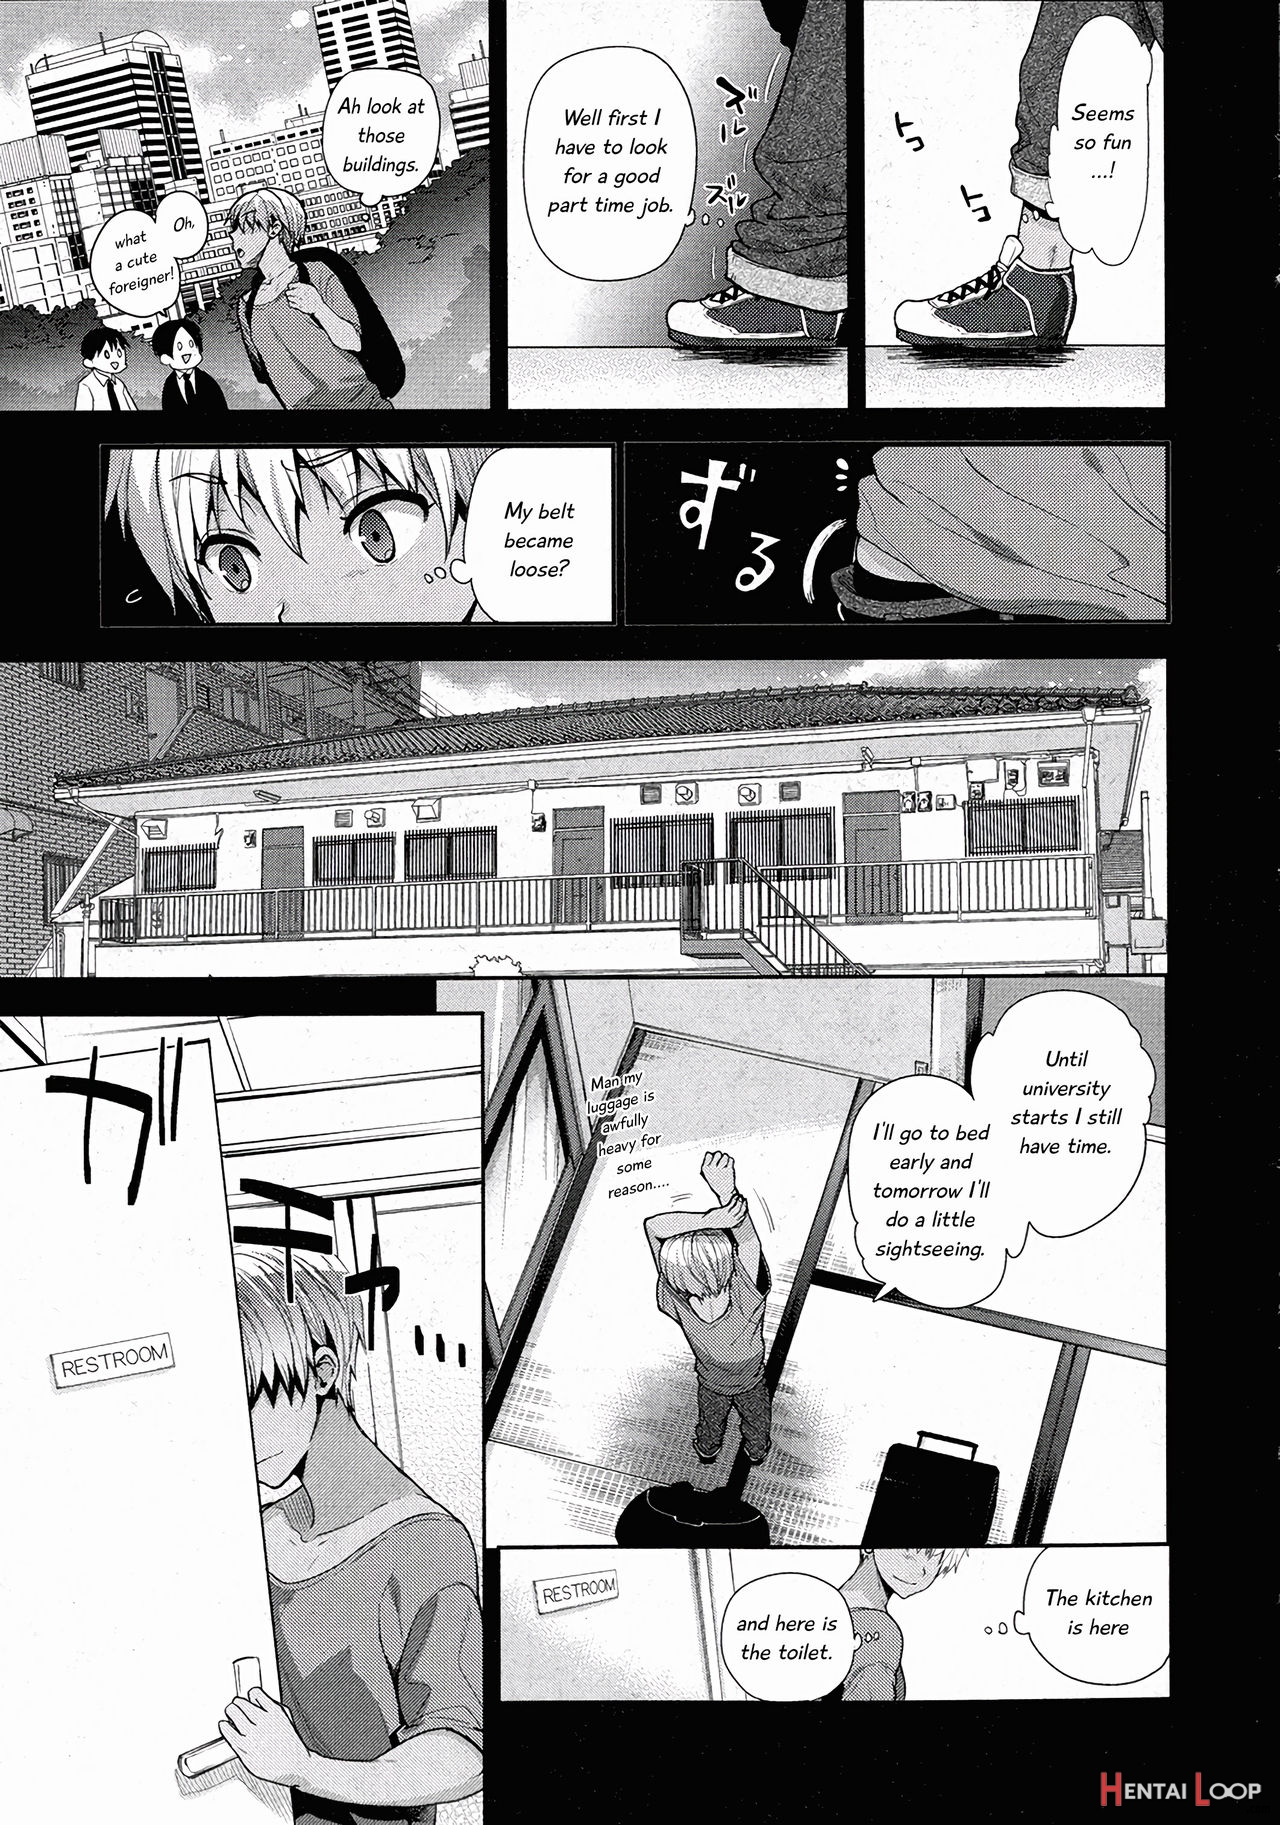 Ts Ryuugaku-ki Ch. 1 page 3